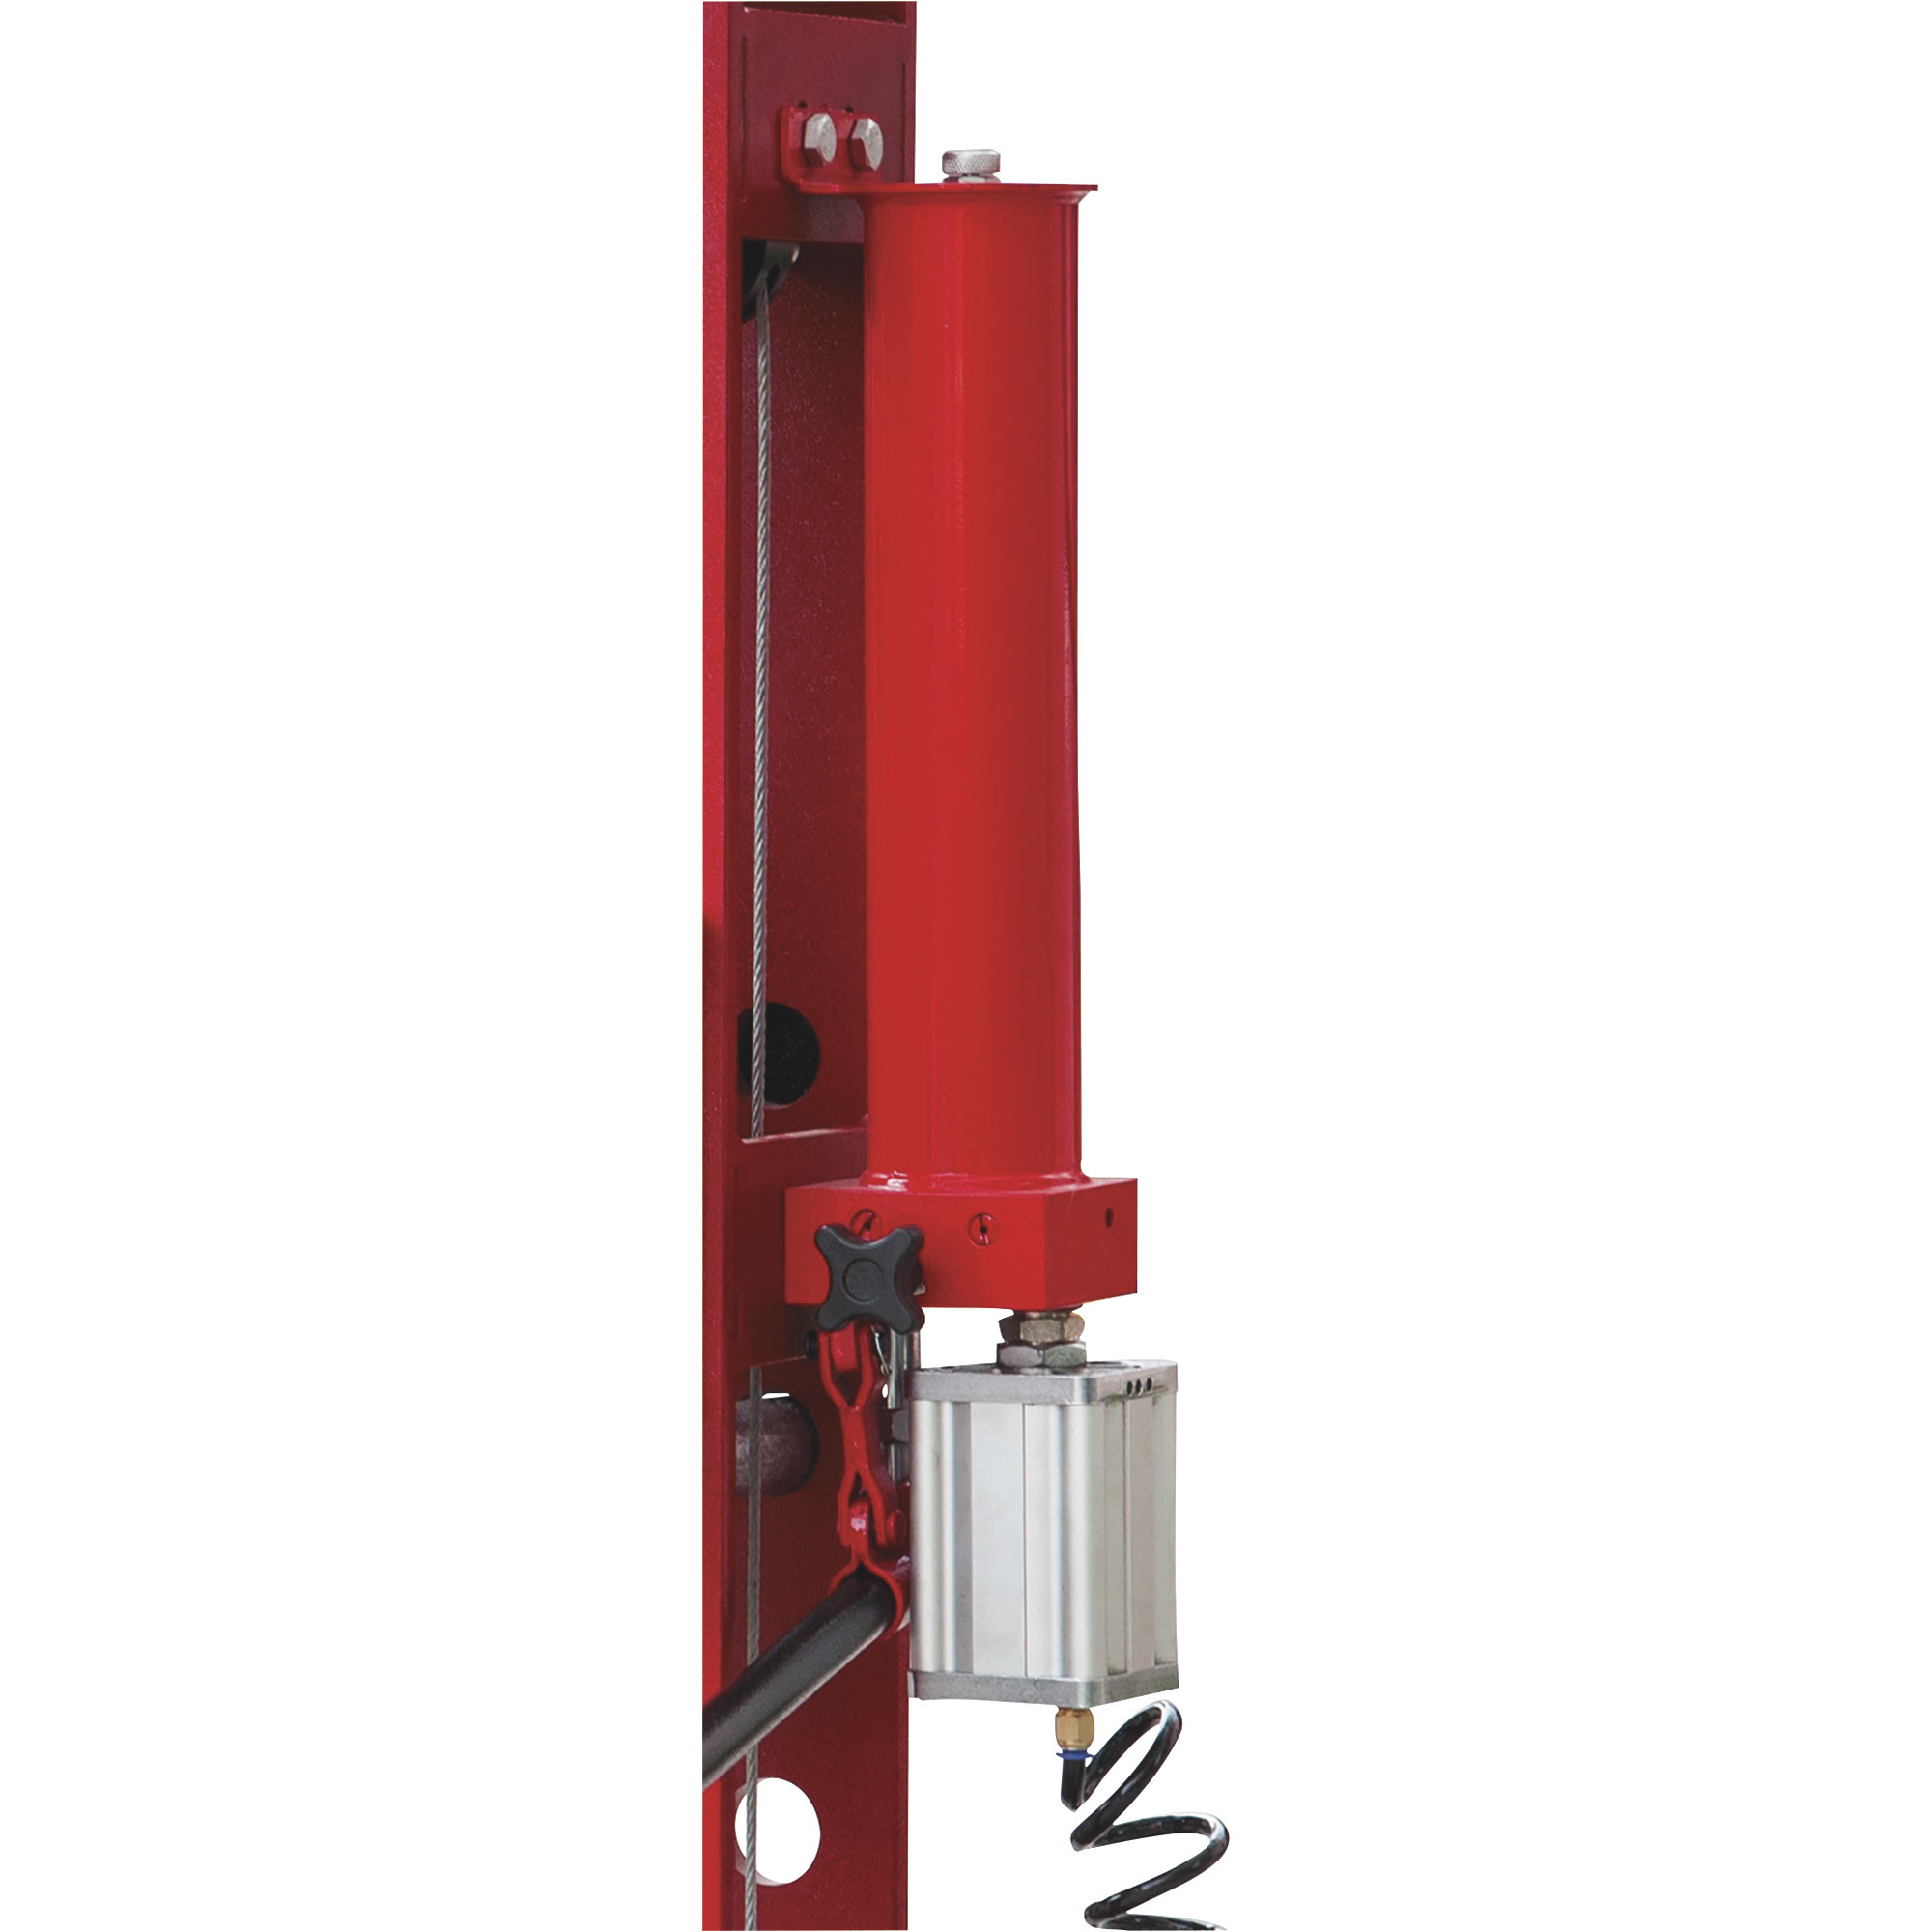 OTC 1834 25-Ton Capacity Shop Press with Air-Driven Hydraulic Pump